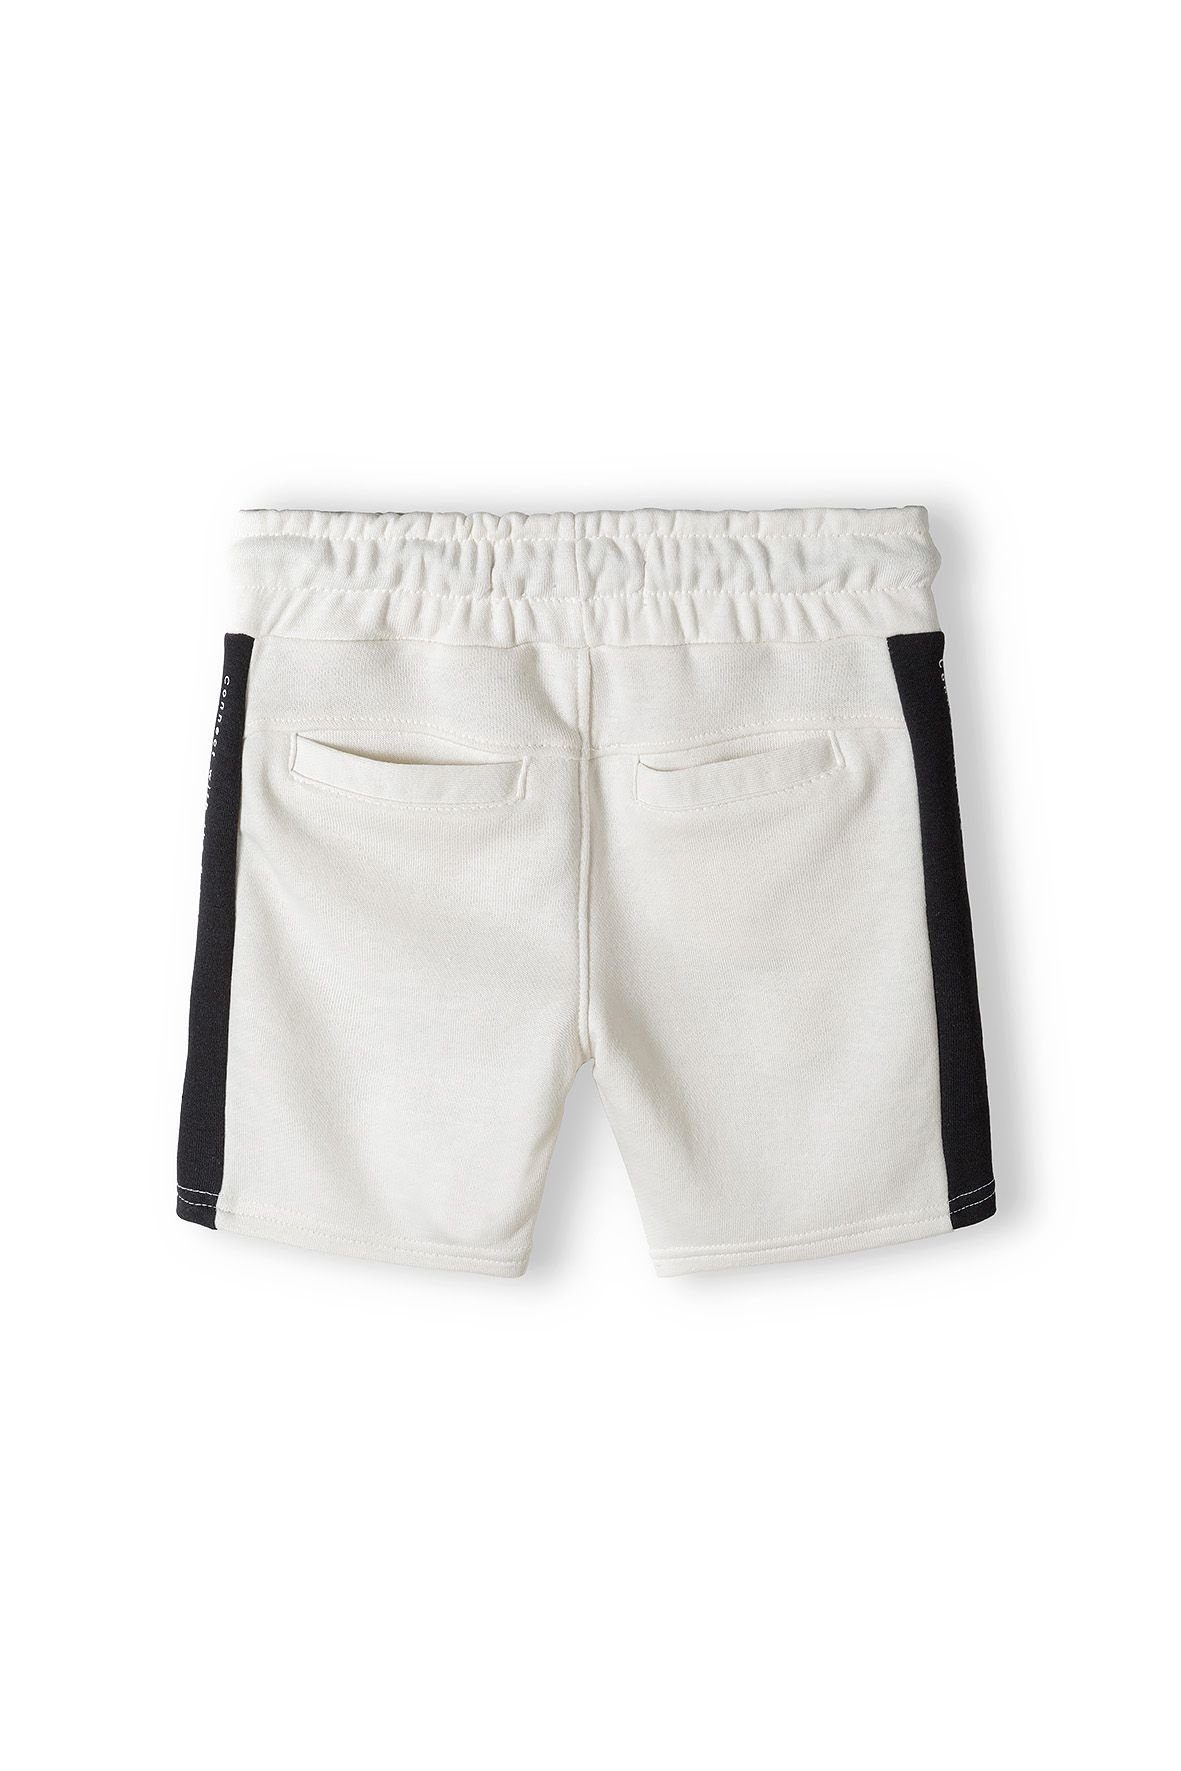 MINOTI (12m-14y) Shorts Sweatshorts Cremeweiß